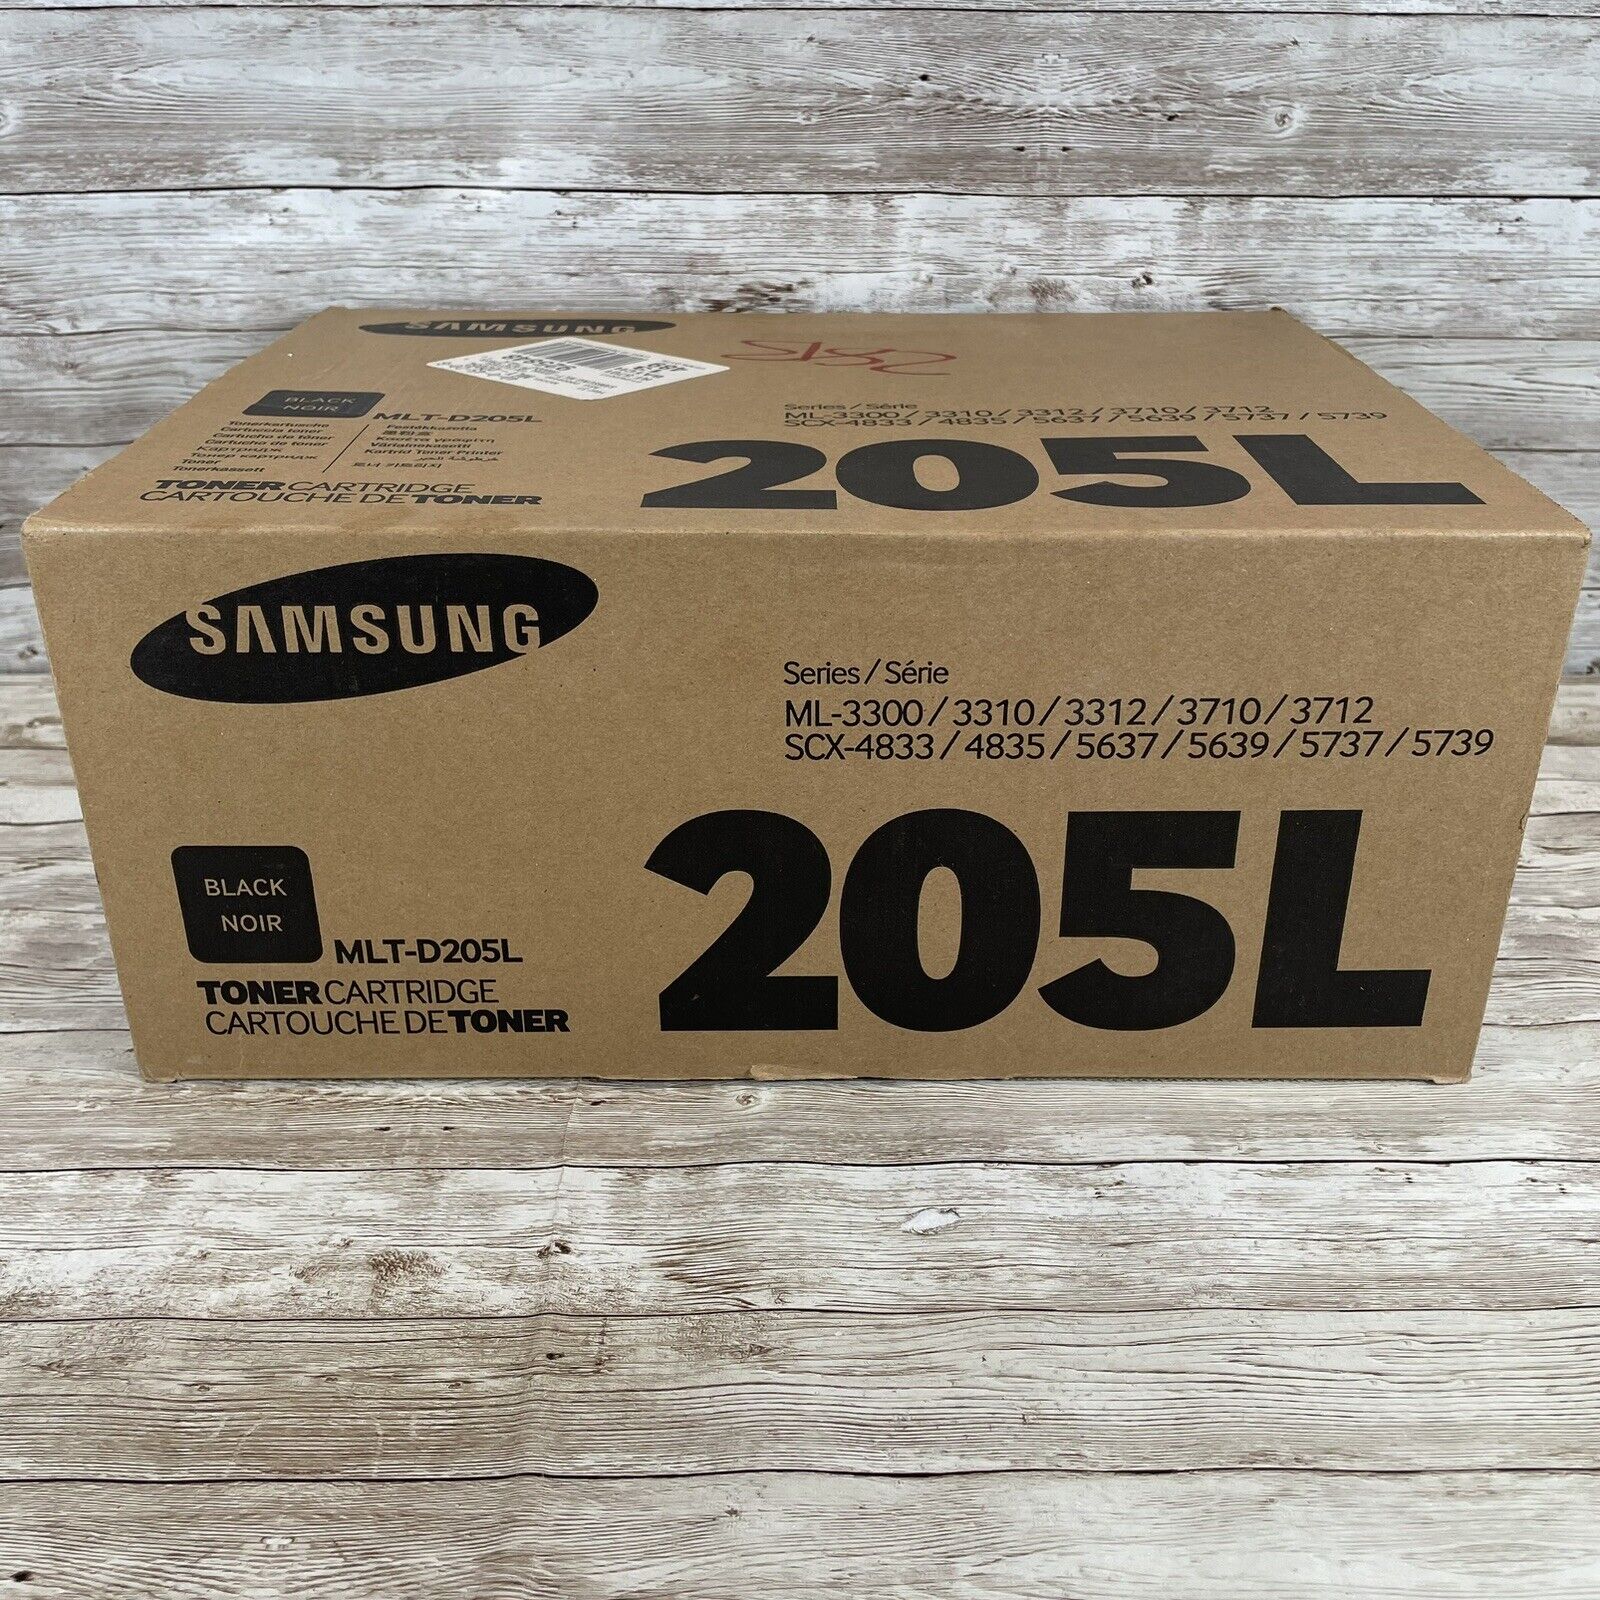 NEW Genuine Samsung MLT-D205L Black Toner Cartridge 205L - Factory Sealed Box